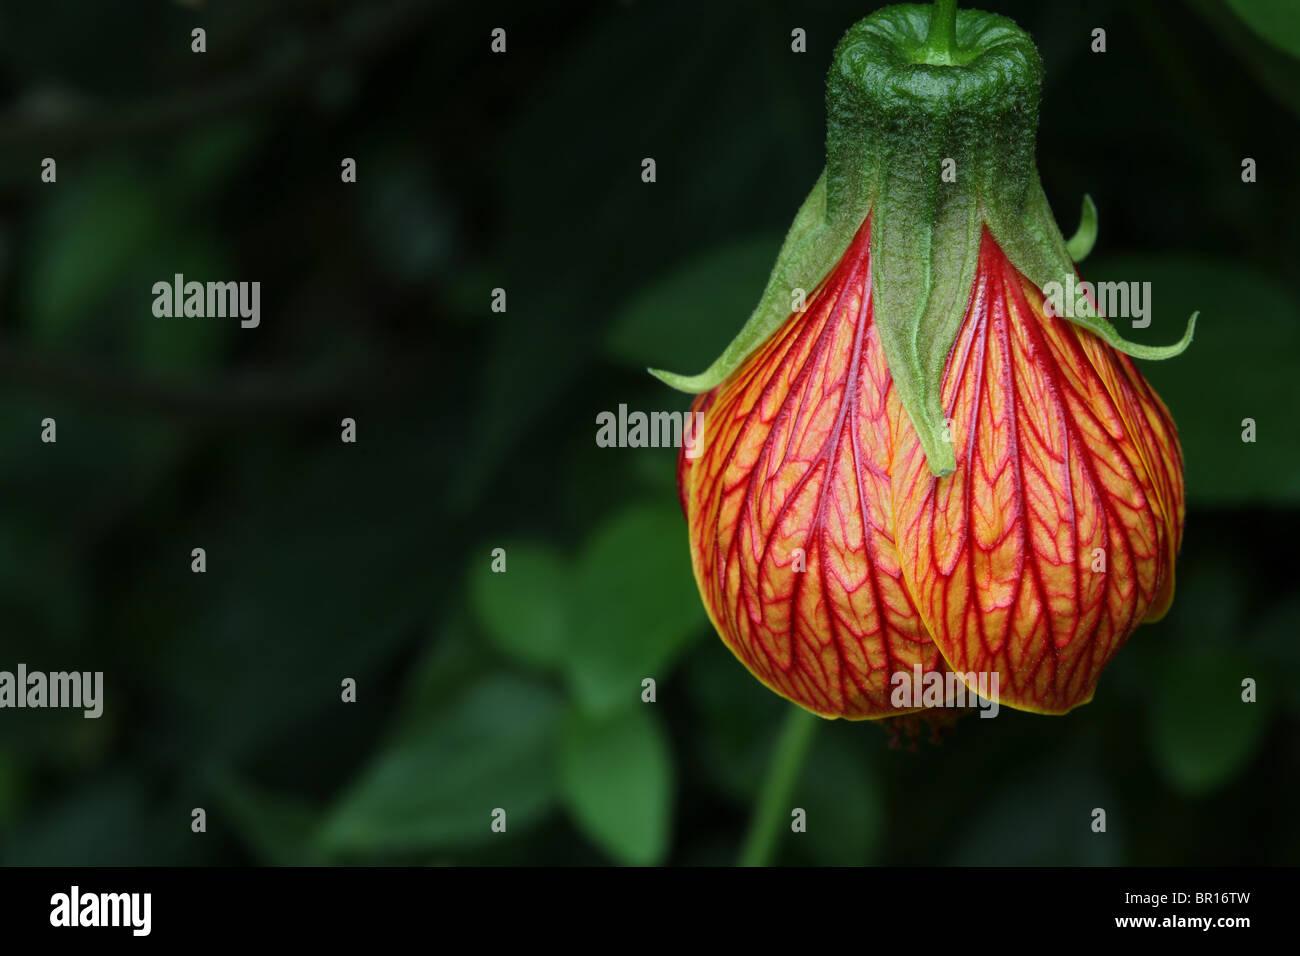 Hanging colorful flower against natural green background - Abutilon hybridum CHINESE LANTERN Stock Photo